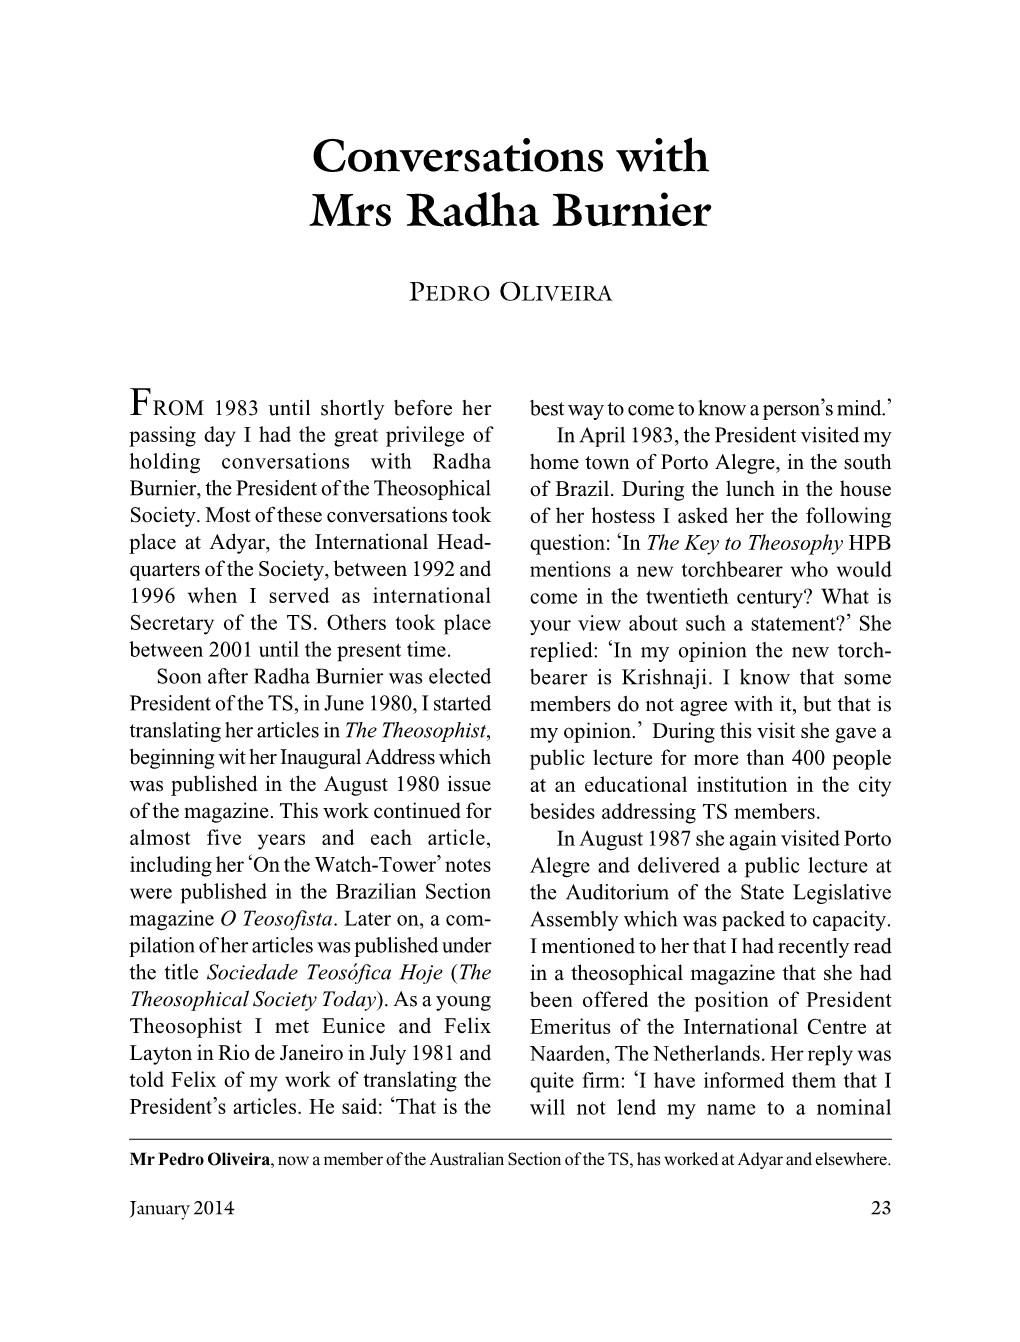 Conversations with Radha Burnier